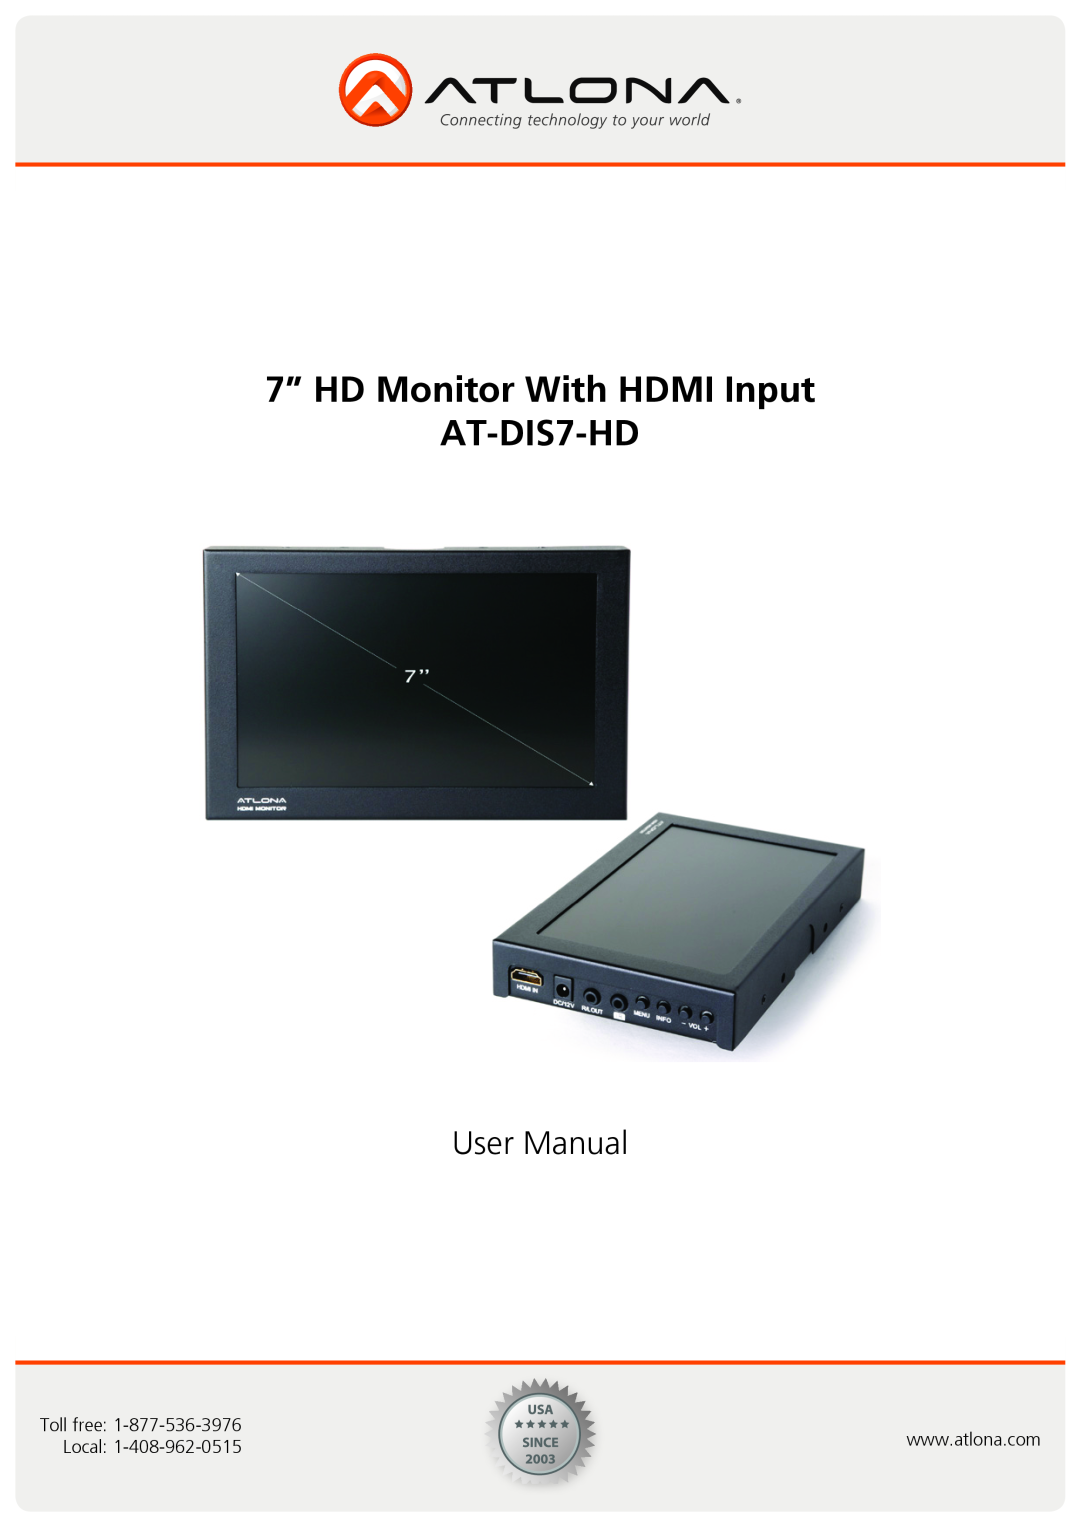 Atlona user manual 7” HD Monitor With HDMI Input AT-DIS7-HD, User Manual, Toll free, Local 